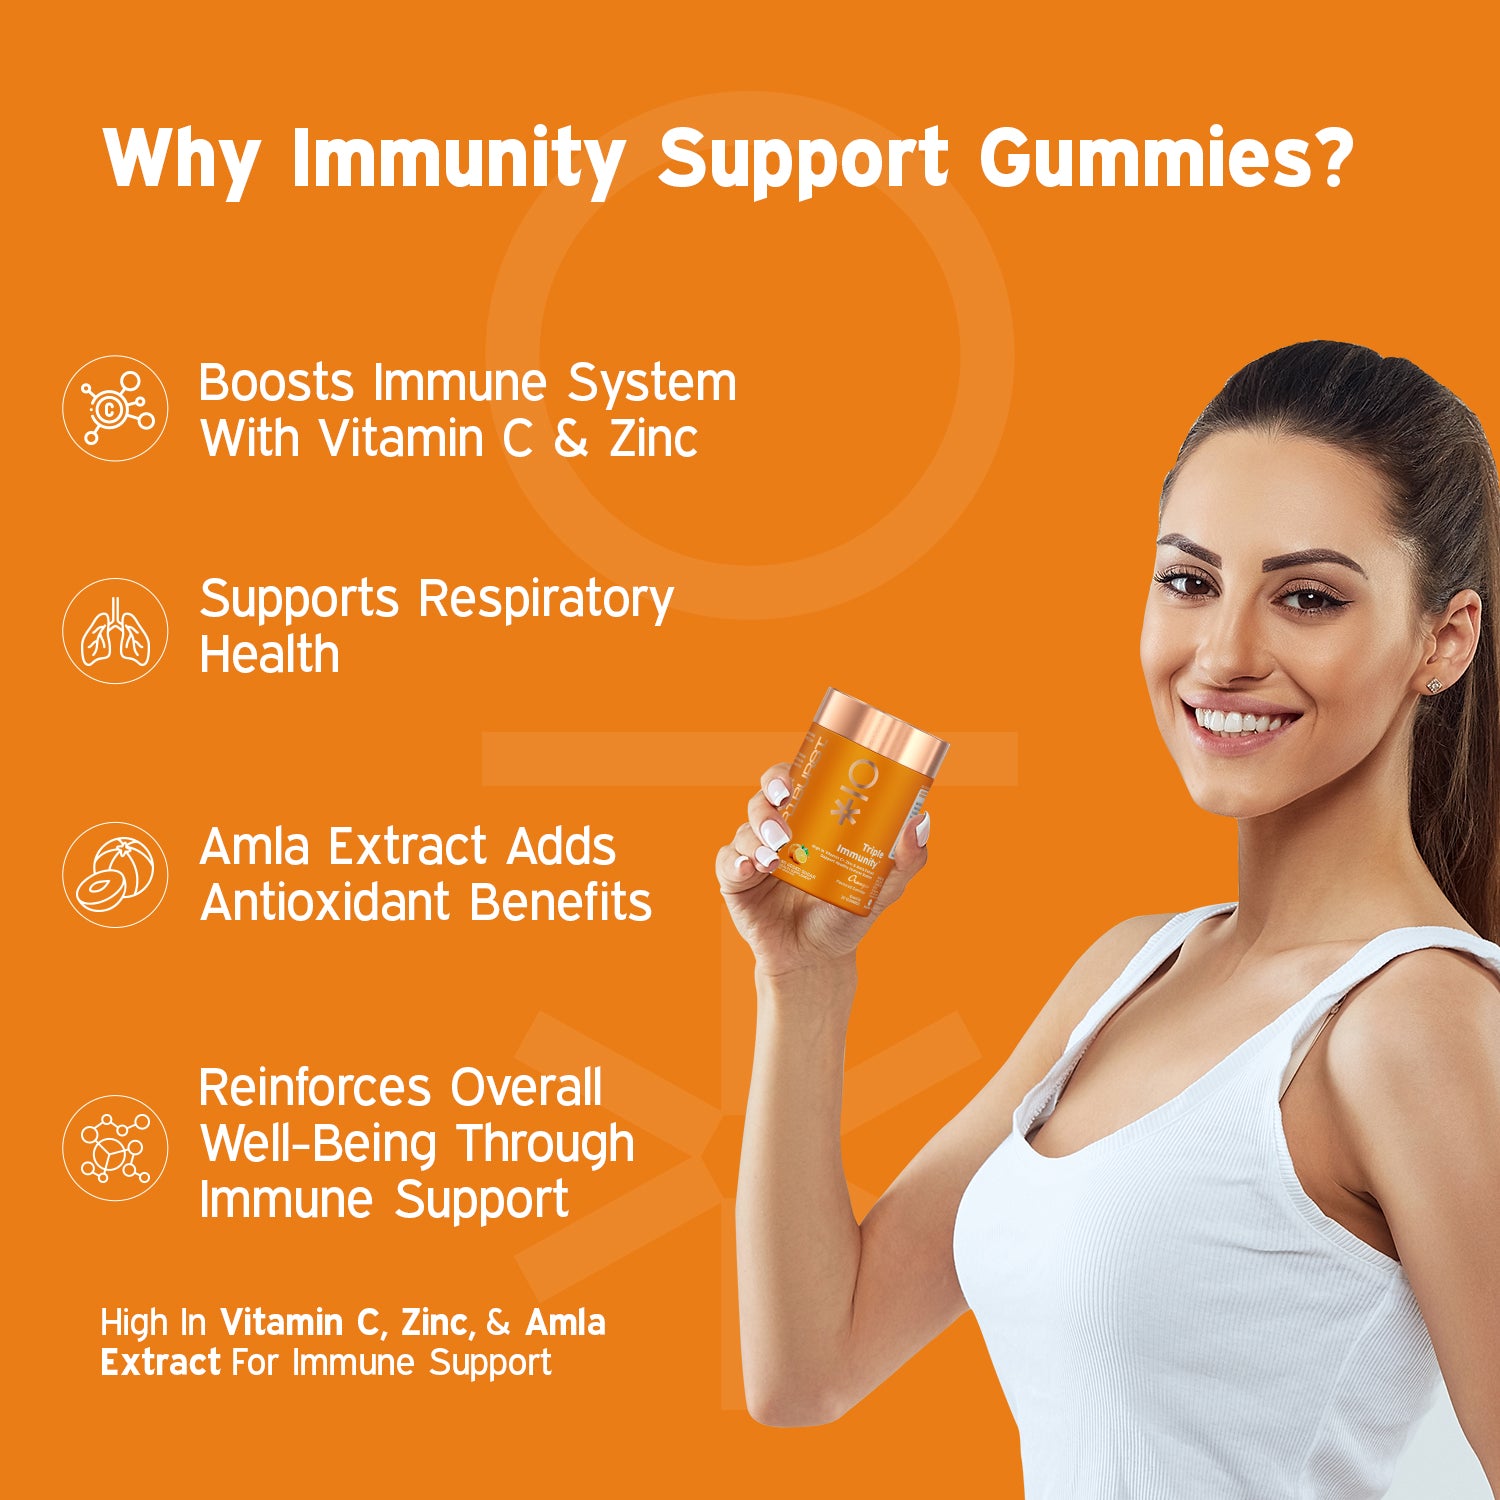 Triple Immunity Gummies with Vitamin C, Zinc & Amla by Nutriburst India